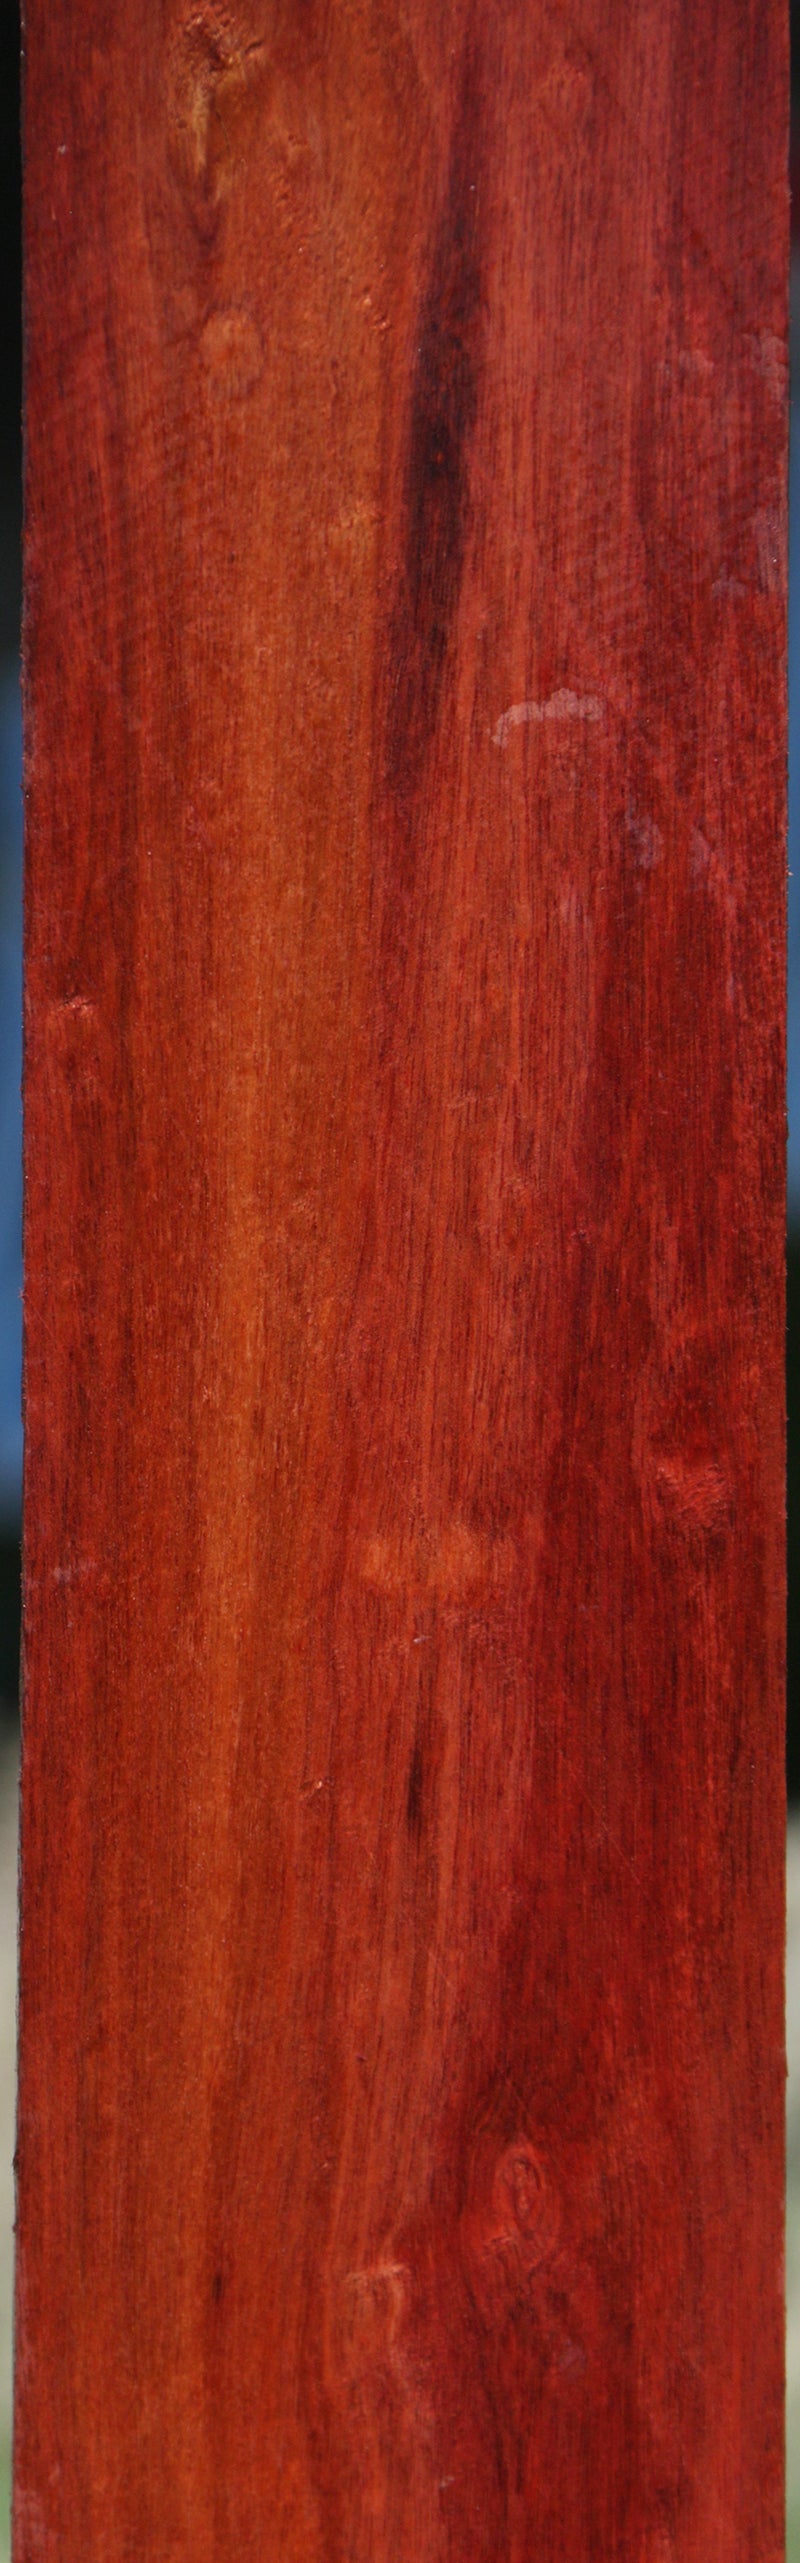 Extra Fancy Bloodwood Lumber